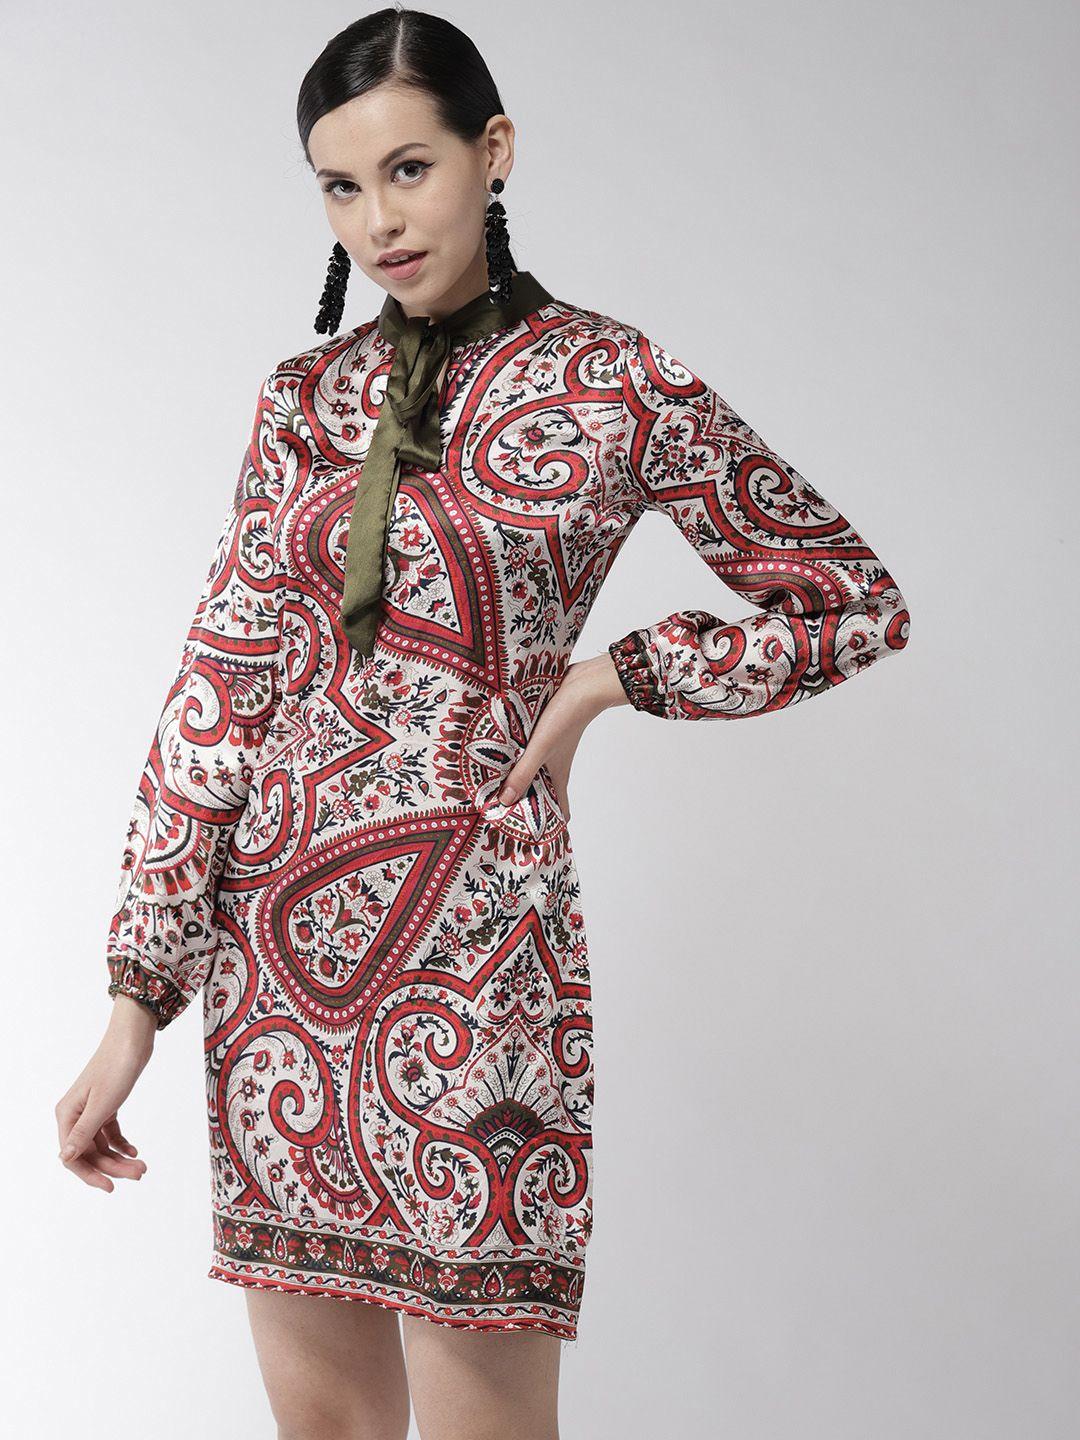 stylestone women red & white printed sheath dress